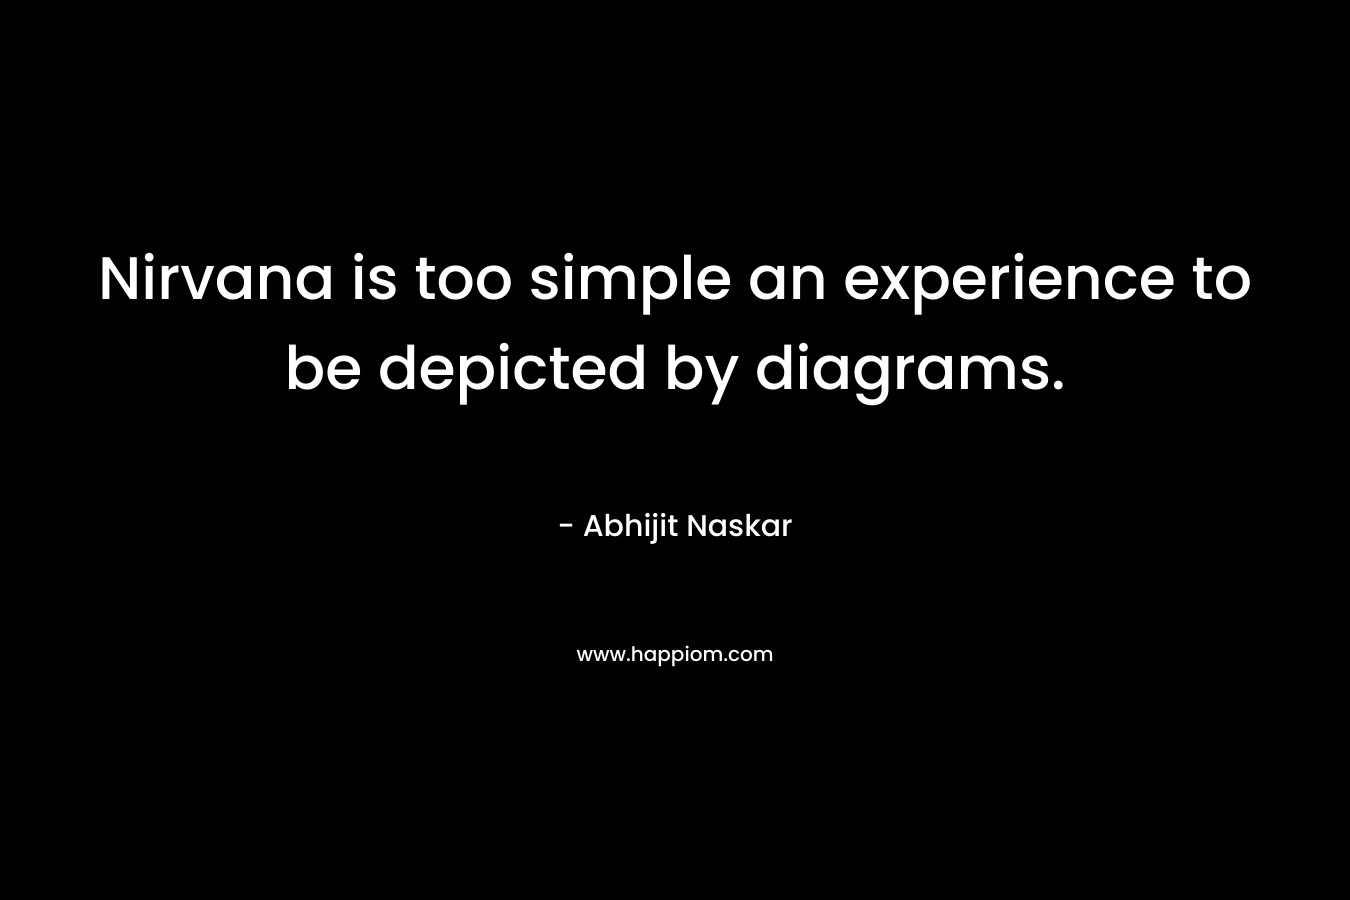 Nirvana is too simple an experience to be depicted by diagrams. – Abhijit Naskar